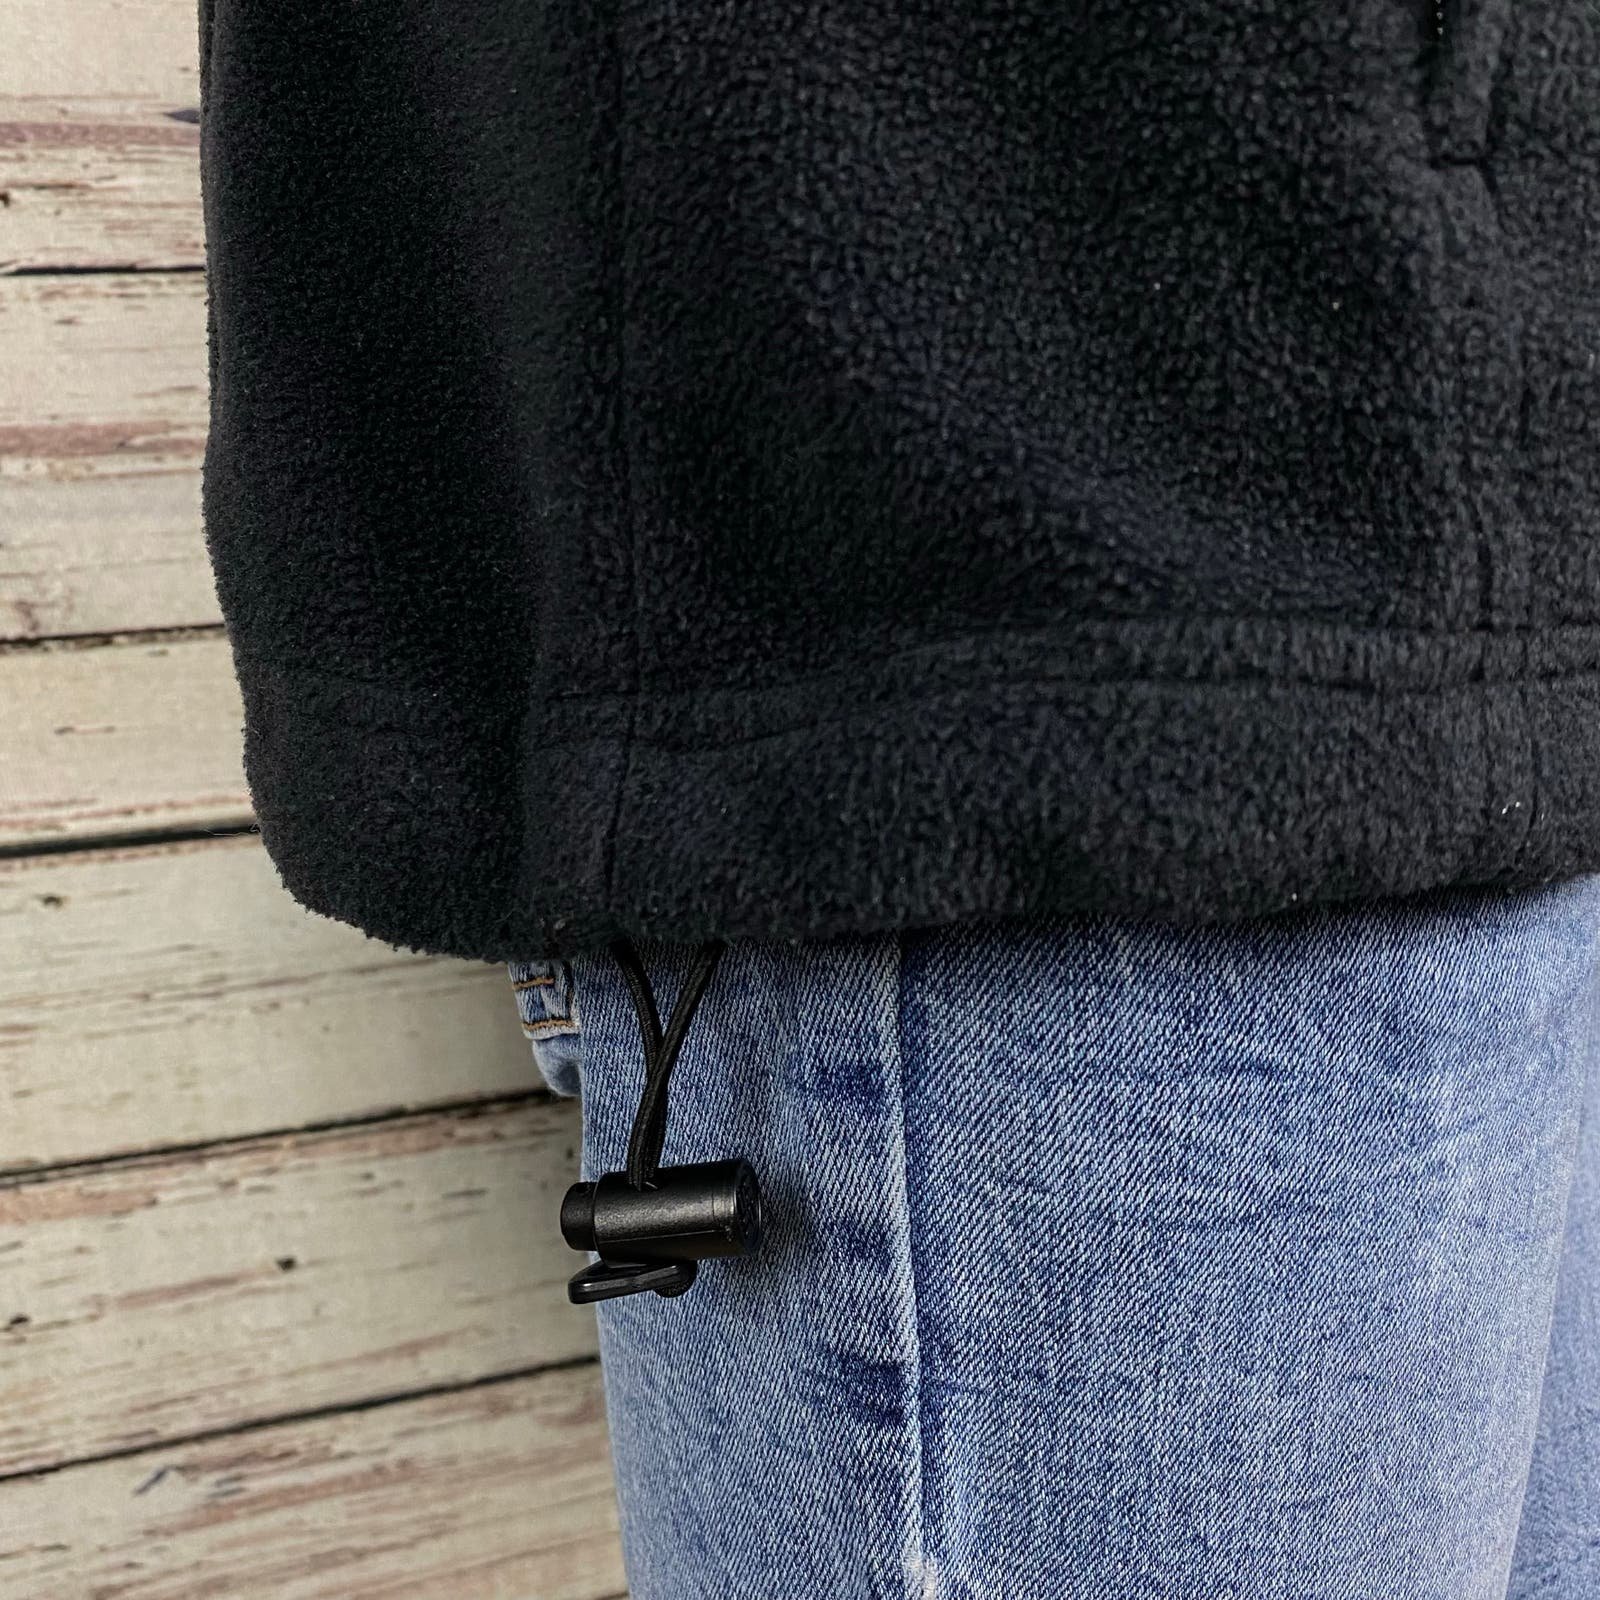 save up to 70% Columbia Simpli.Fi Black Zip Up High Neck Fleece Jacket SMALL Pockets Back Logo nJYSuNPcy New Style